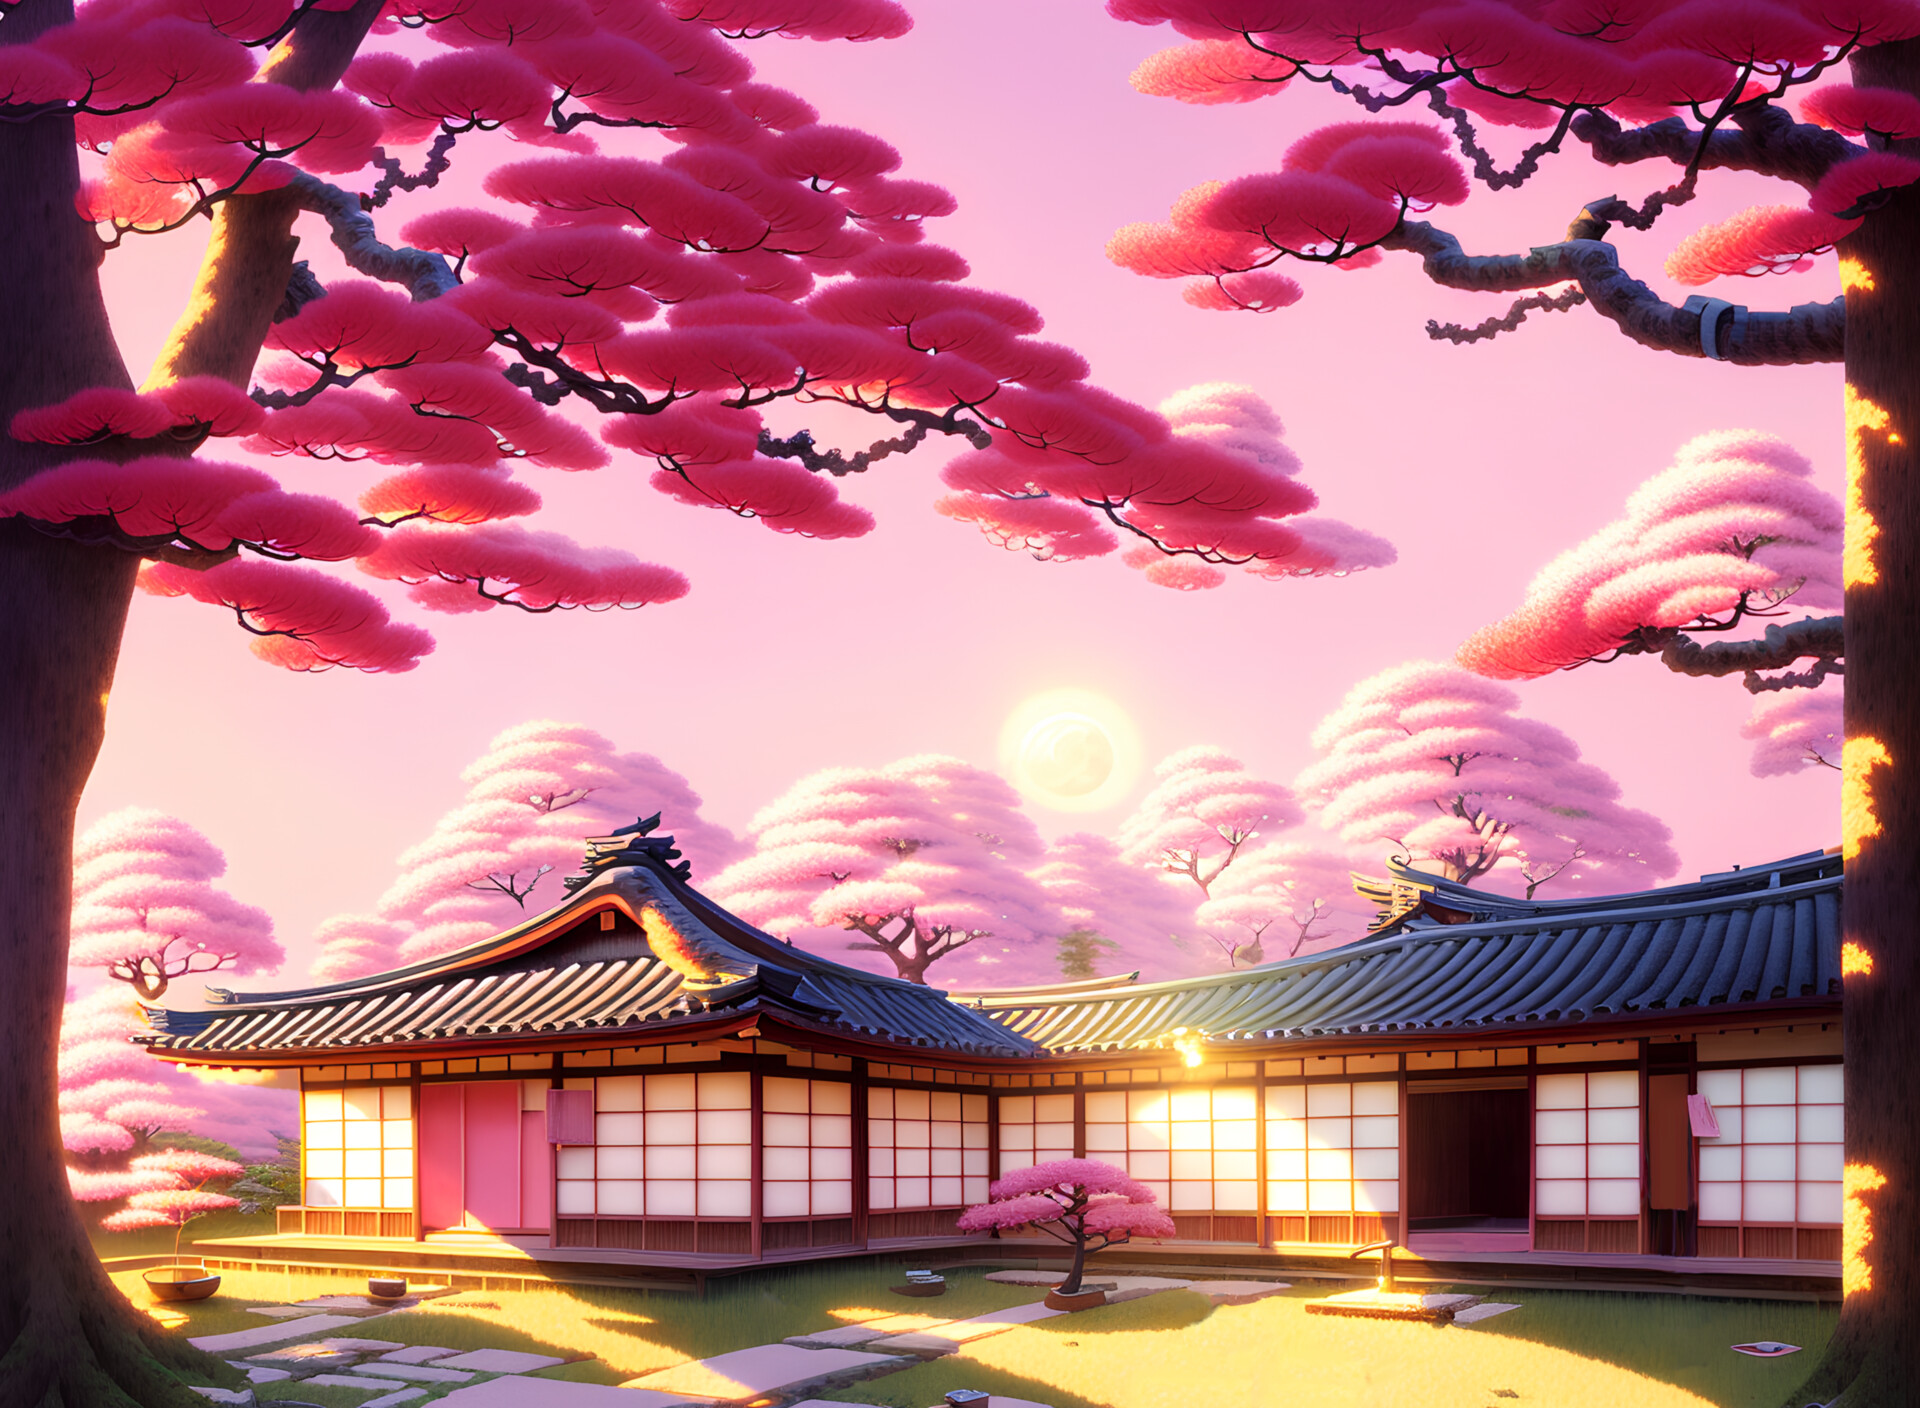 Top 15 Perfect Anime Houses: Home Sweet Homes - MyAnimeList.net